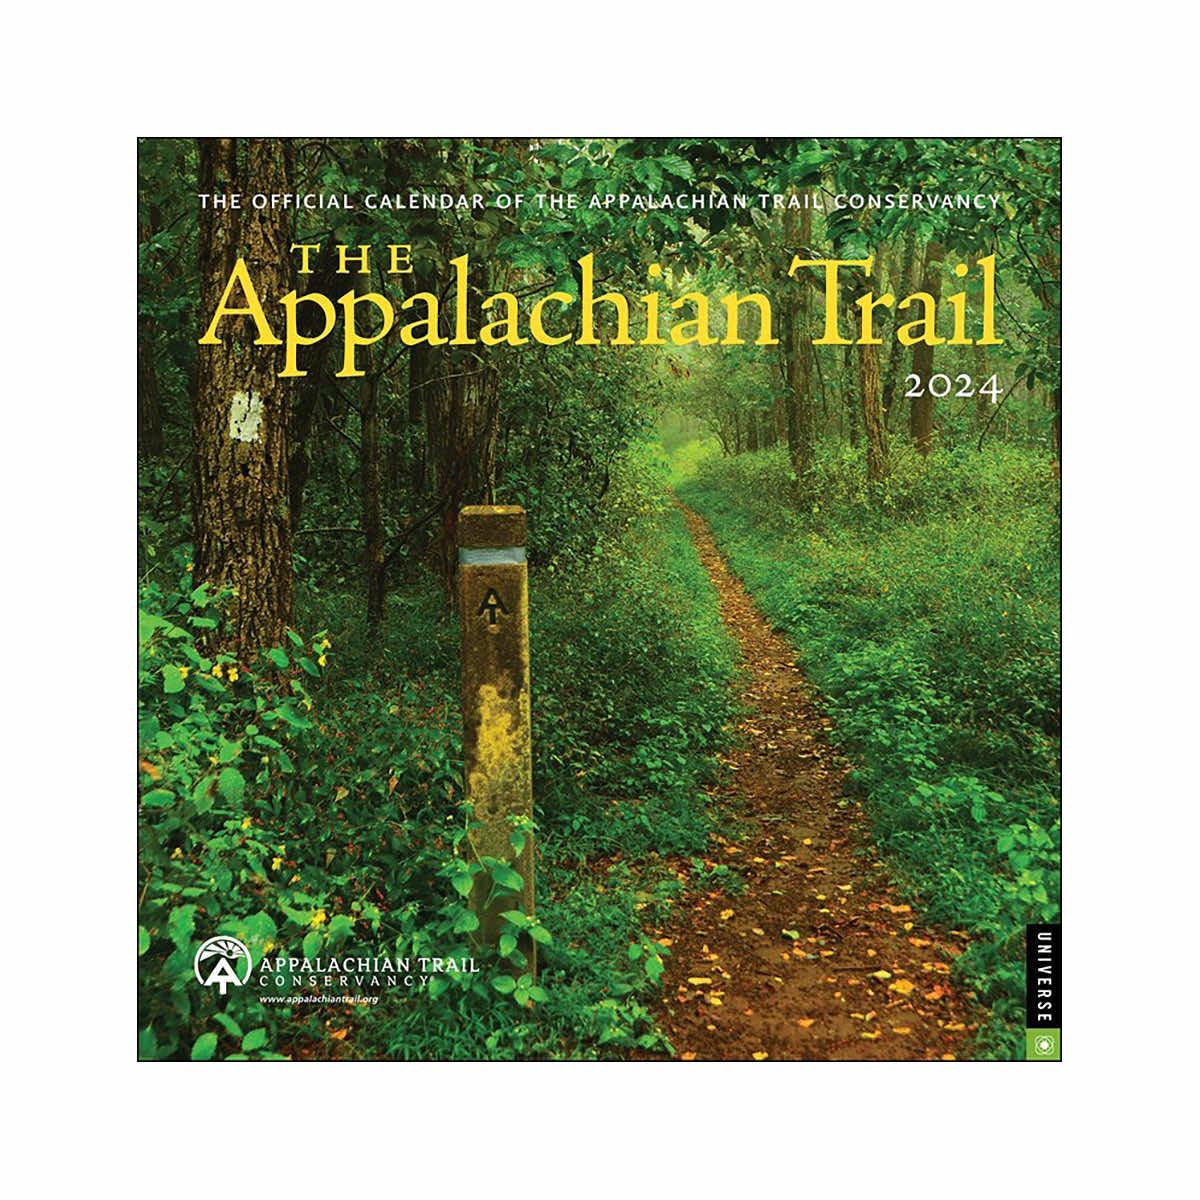  Appalachian Trail 2024 Wall Calendar